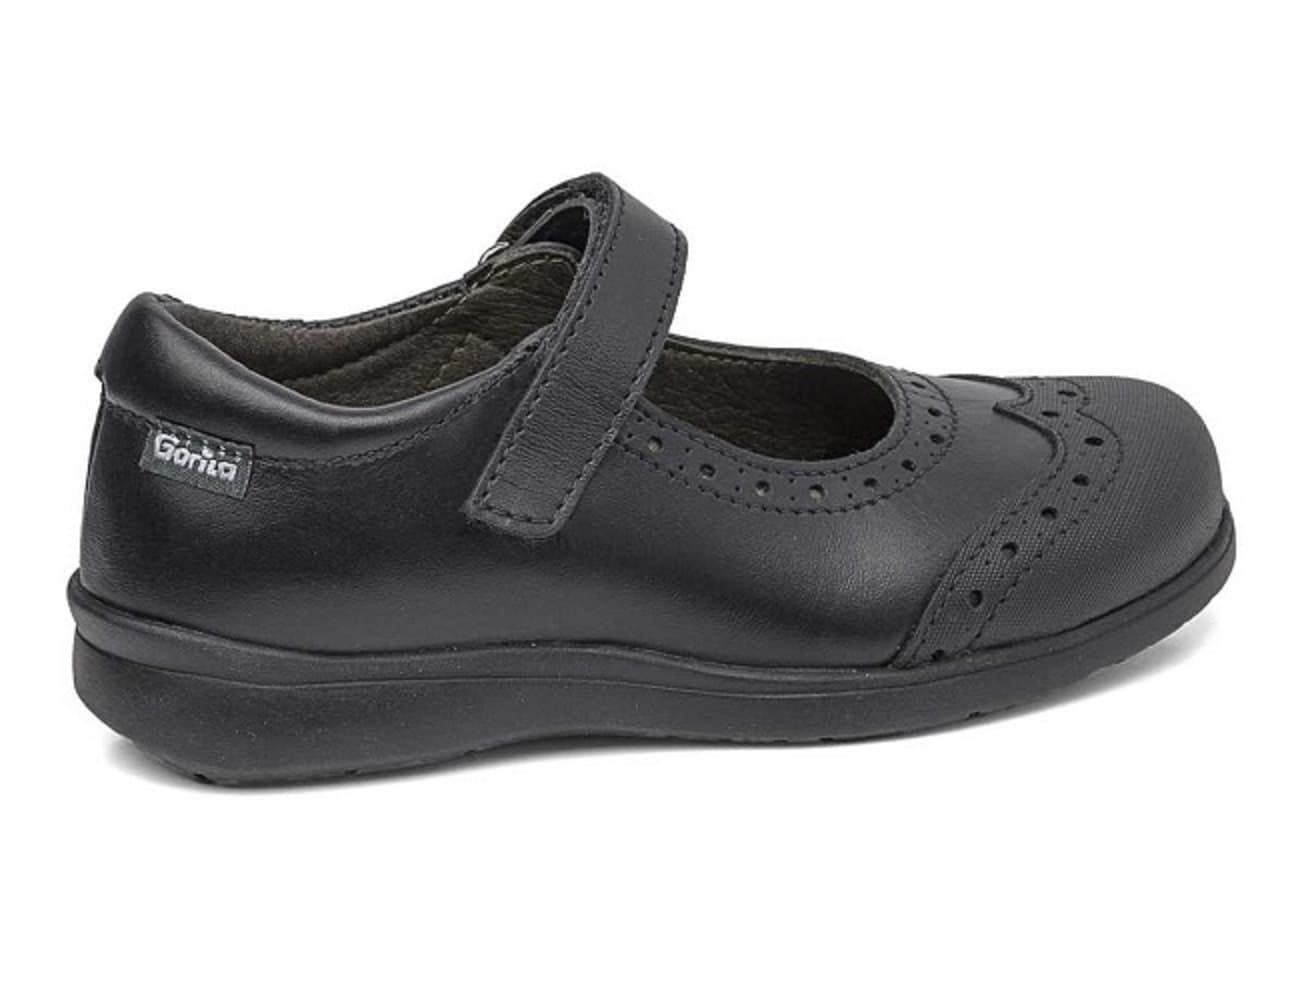 Gorilla Girl's Black School Shoe with Toe Cap - Image 2